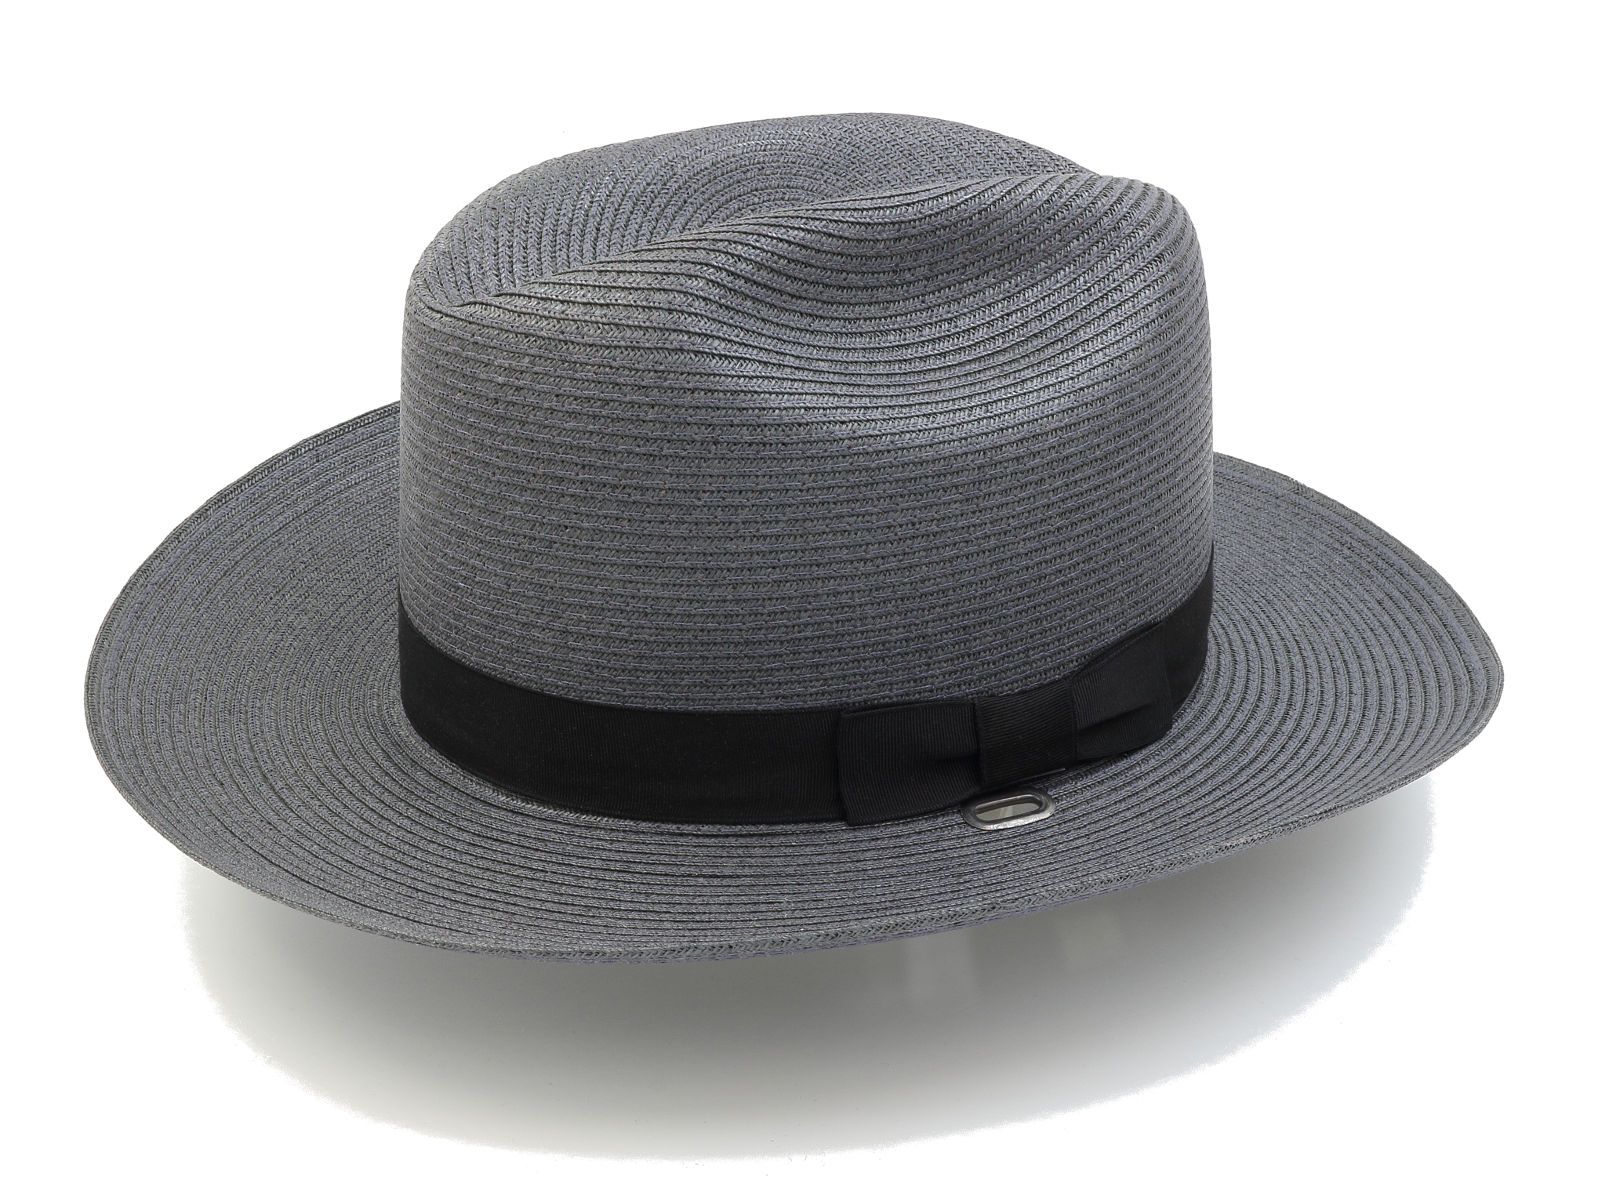 Trooper Style Straw Hat - Stratton Hats